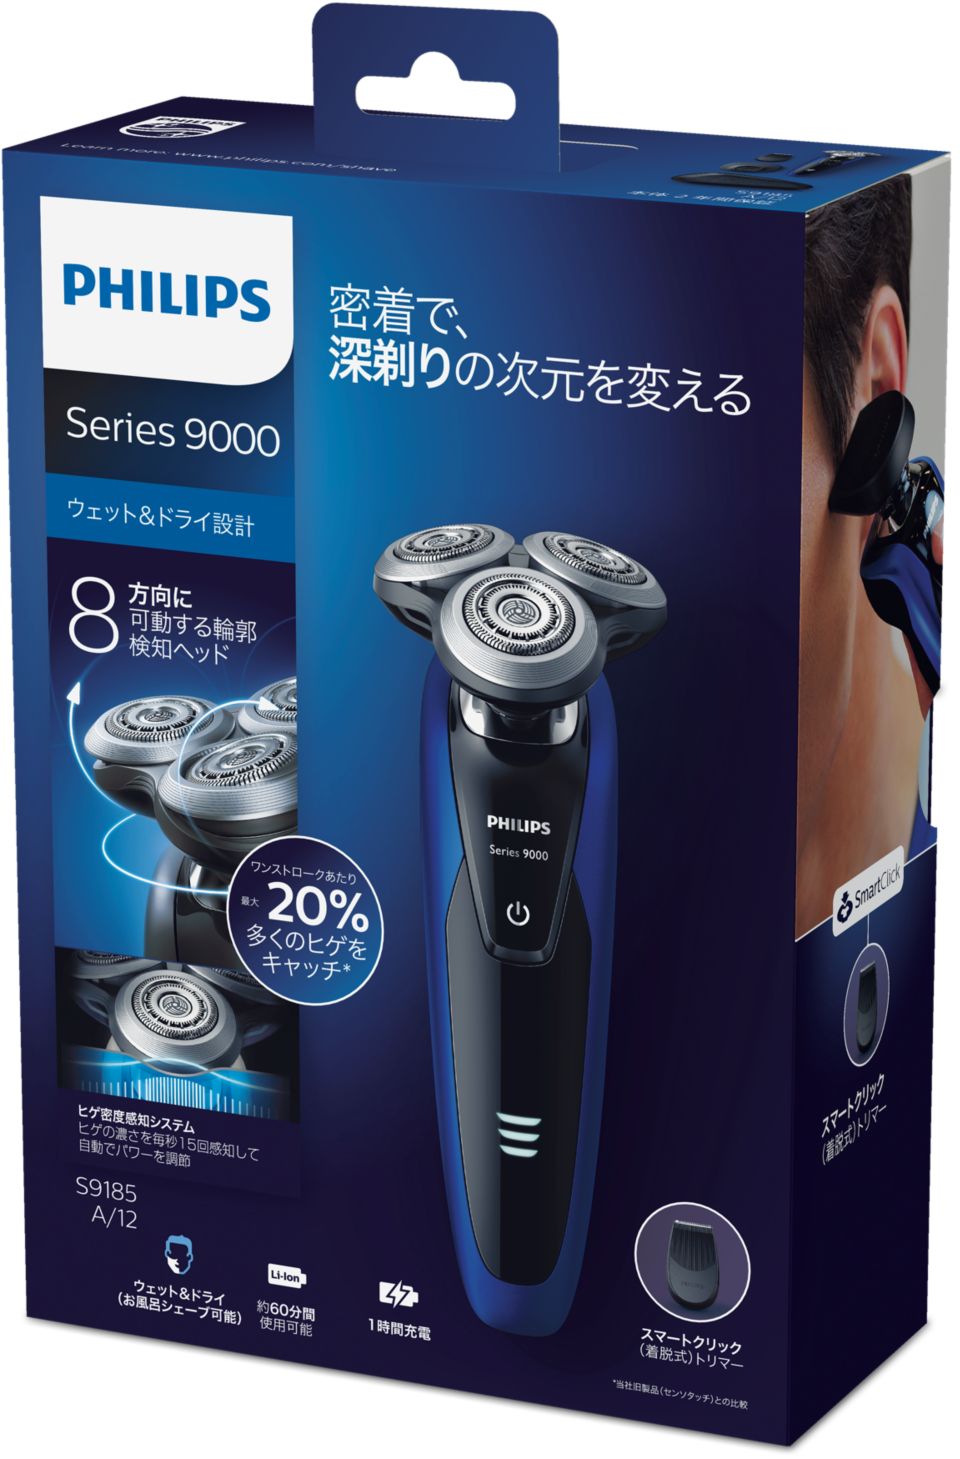 PHILIPS メンズ電気シェーバー 9000シリーズ S9185